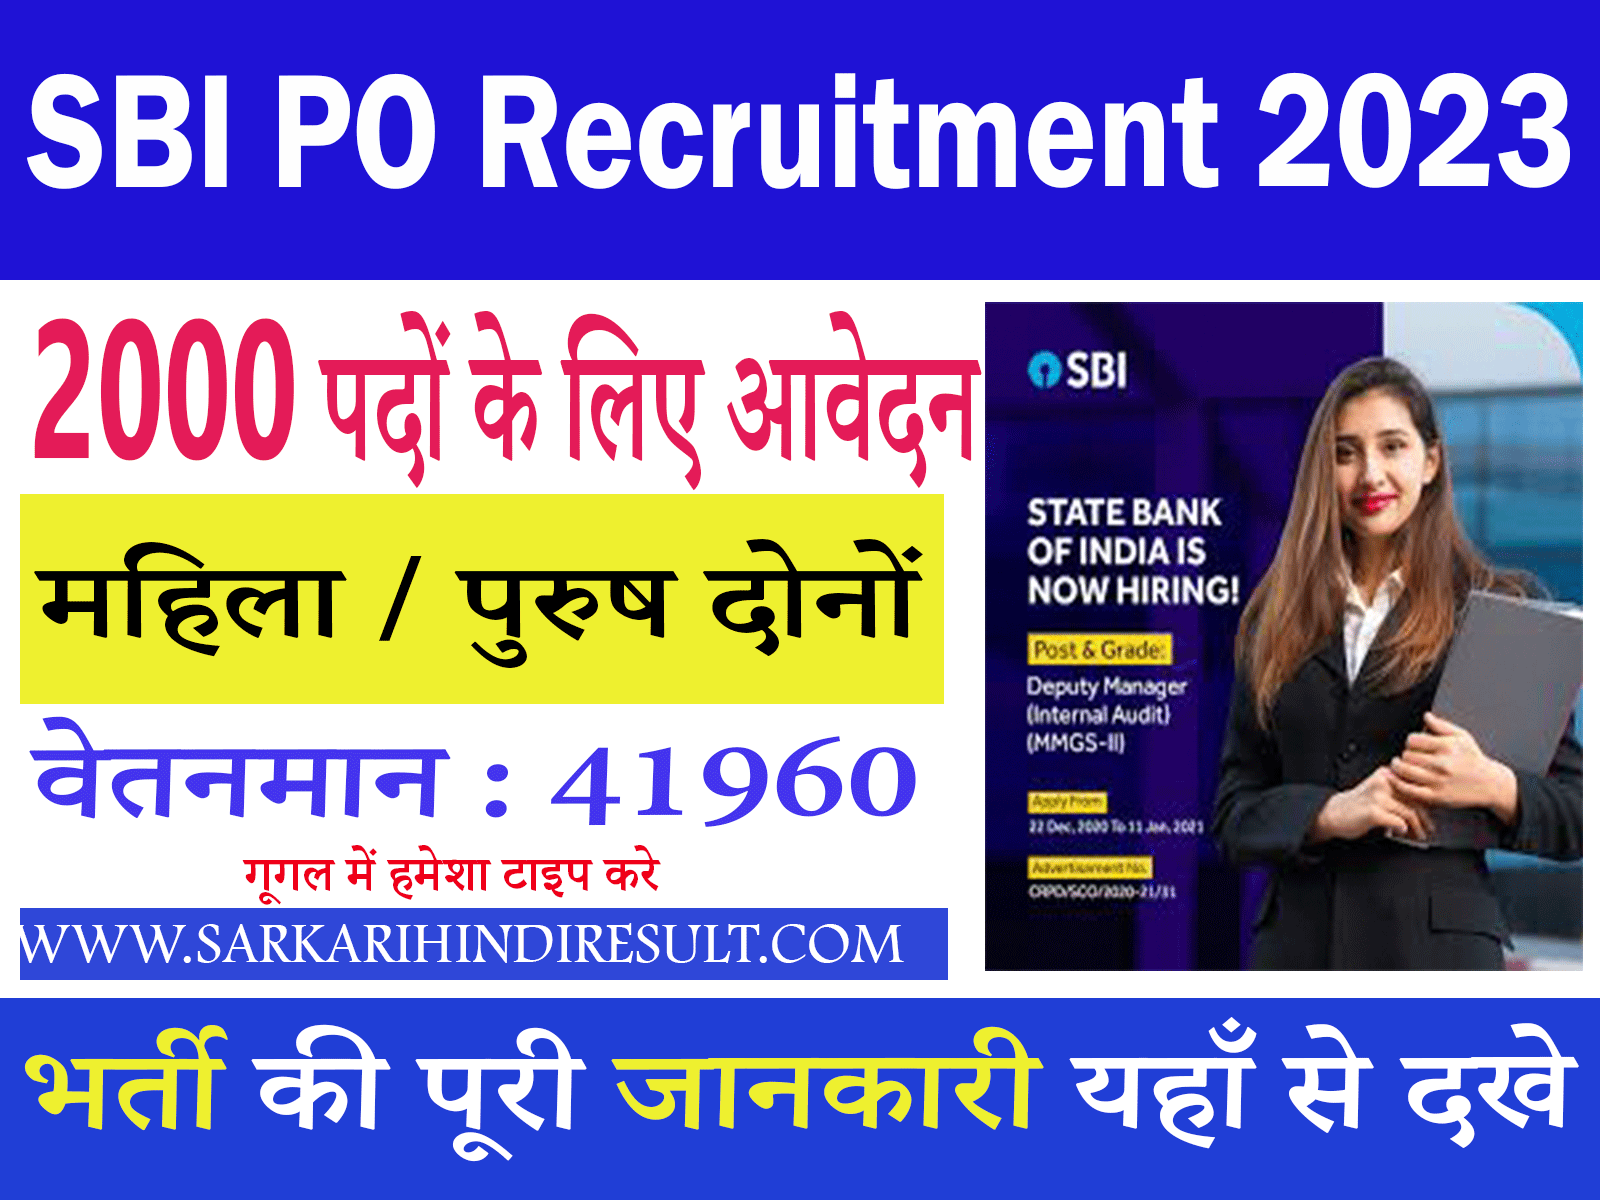 SBI PO Recruitment 2023 Last Date To Apply